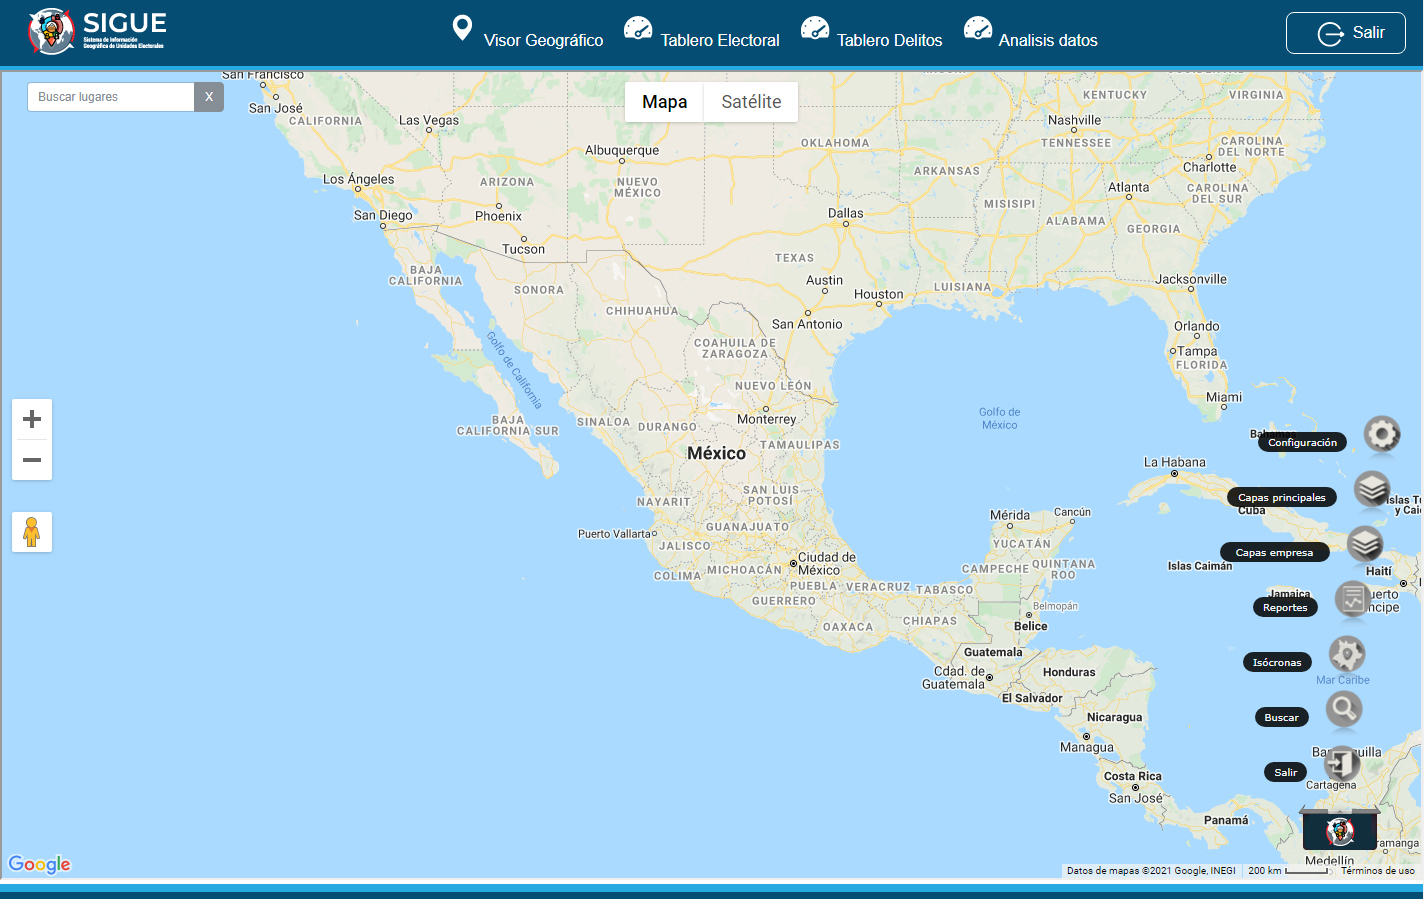 SIGUE - UI/UX + Google Maps Platform